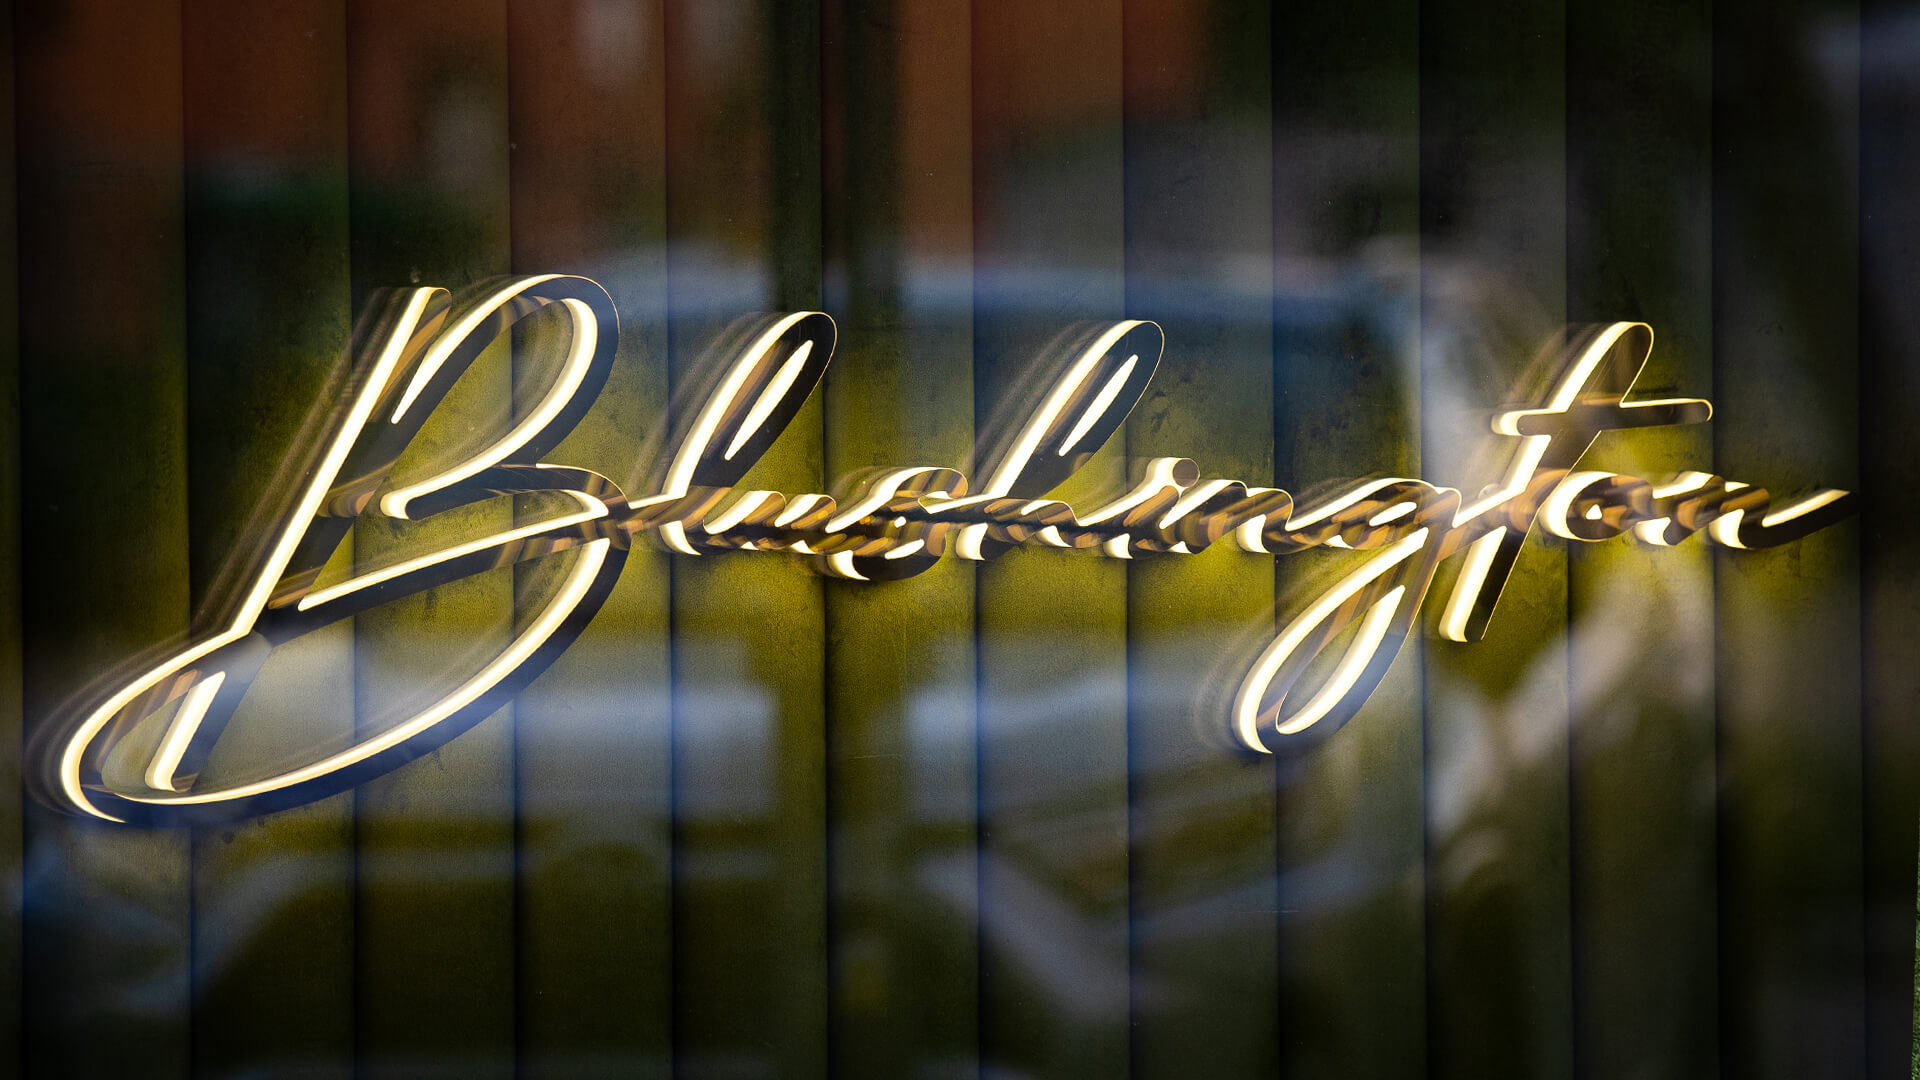 Blushington - Lettere LED Blushington illuminate lateralmente, in oro.